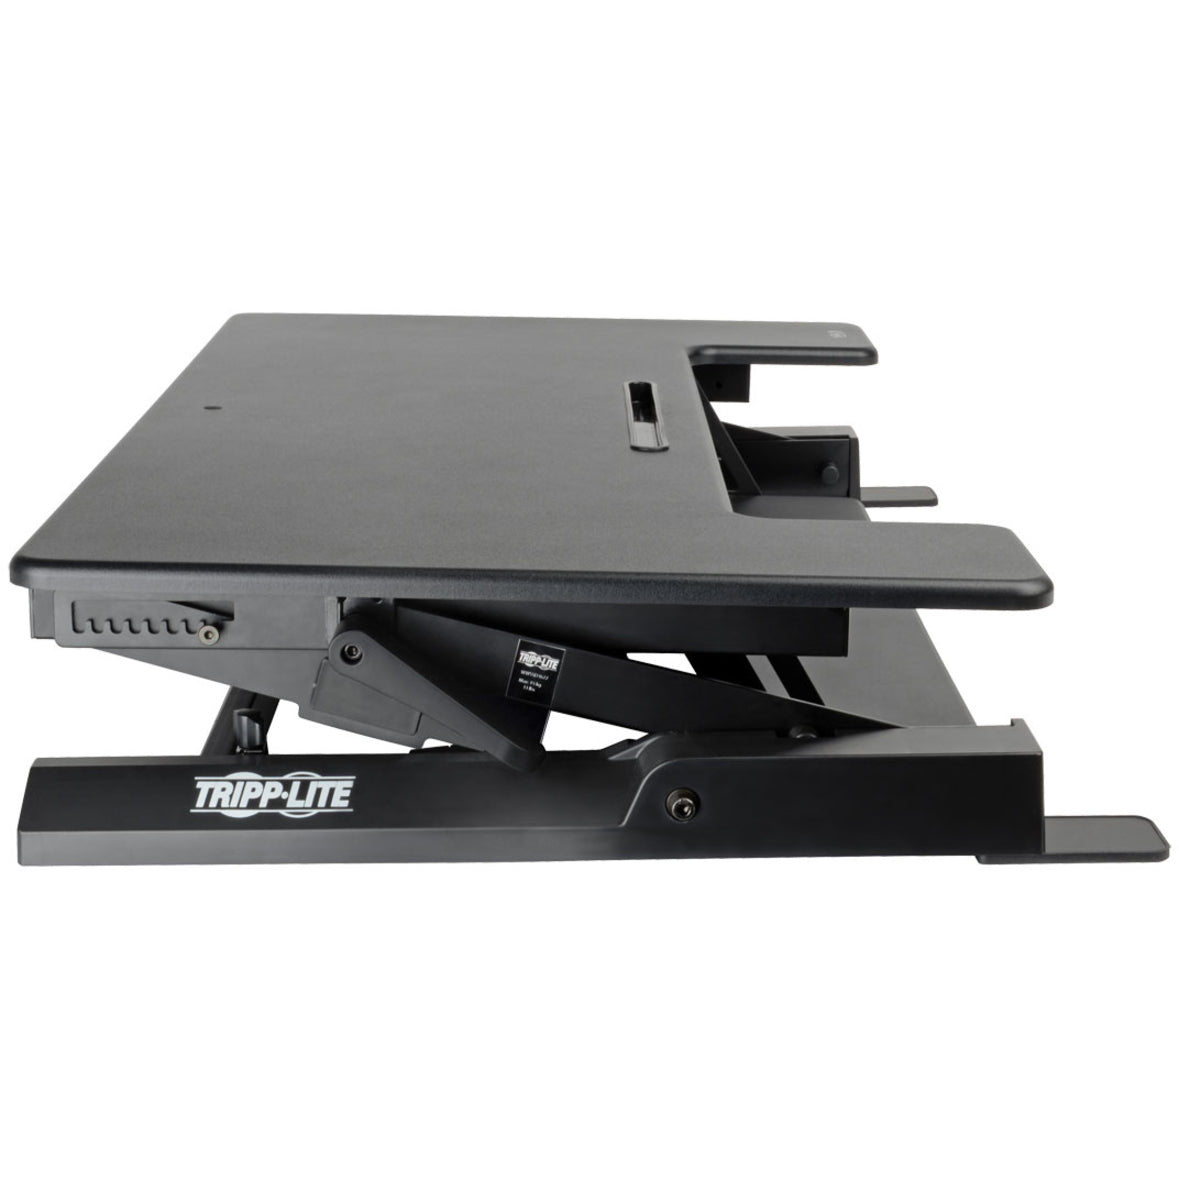 Tripp Lite WWSSD3622 WorkWise Multipurpose Desktop Riser, Height Adjustable, Cable Management, 33 lb Load Capacity